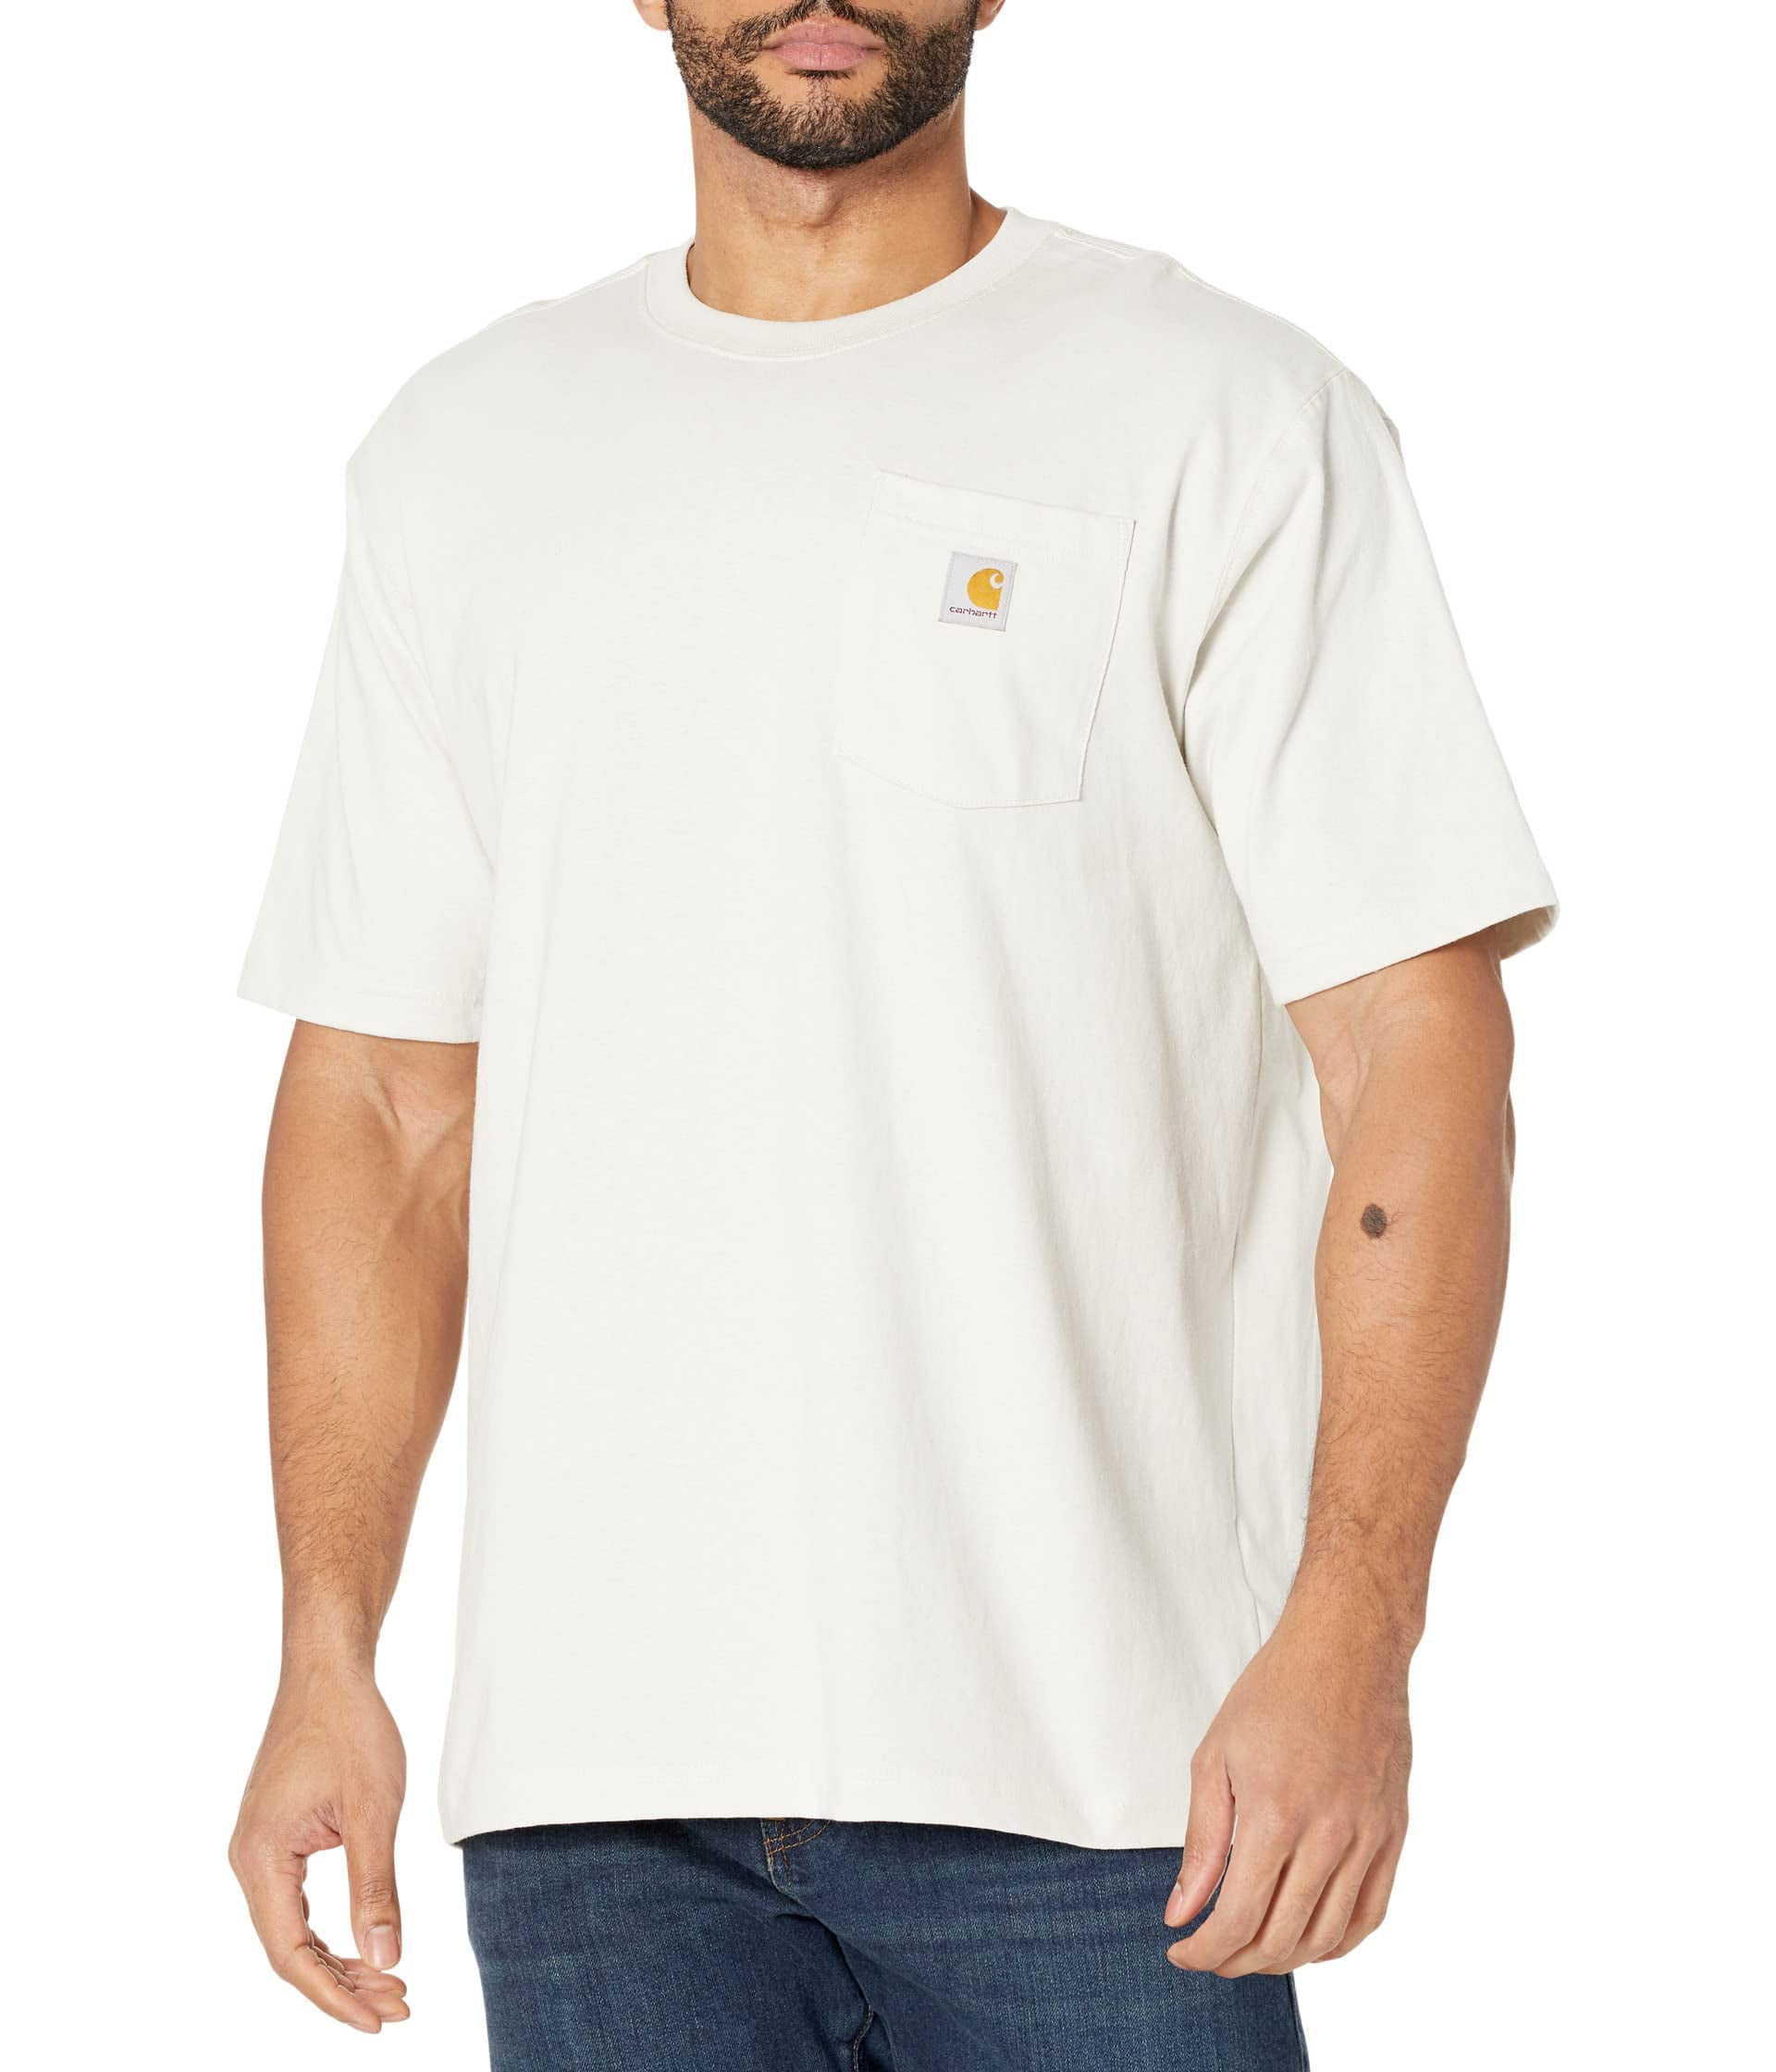 Carhartt T Shirt Men's Workwear Sizes Medium- 2XL Black White Grey AFY001  NG